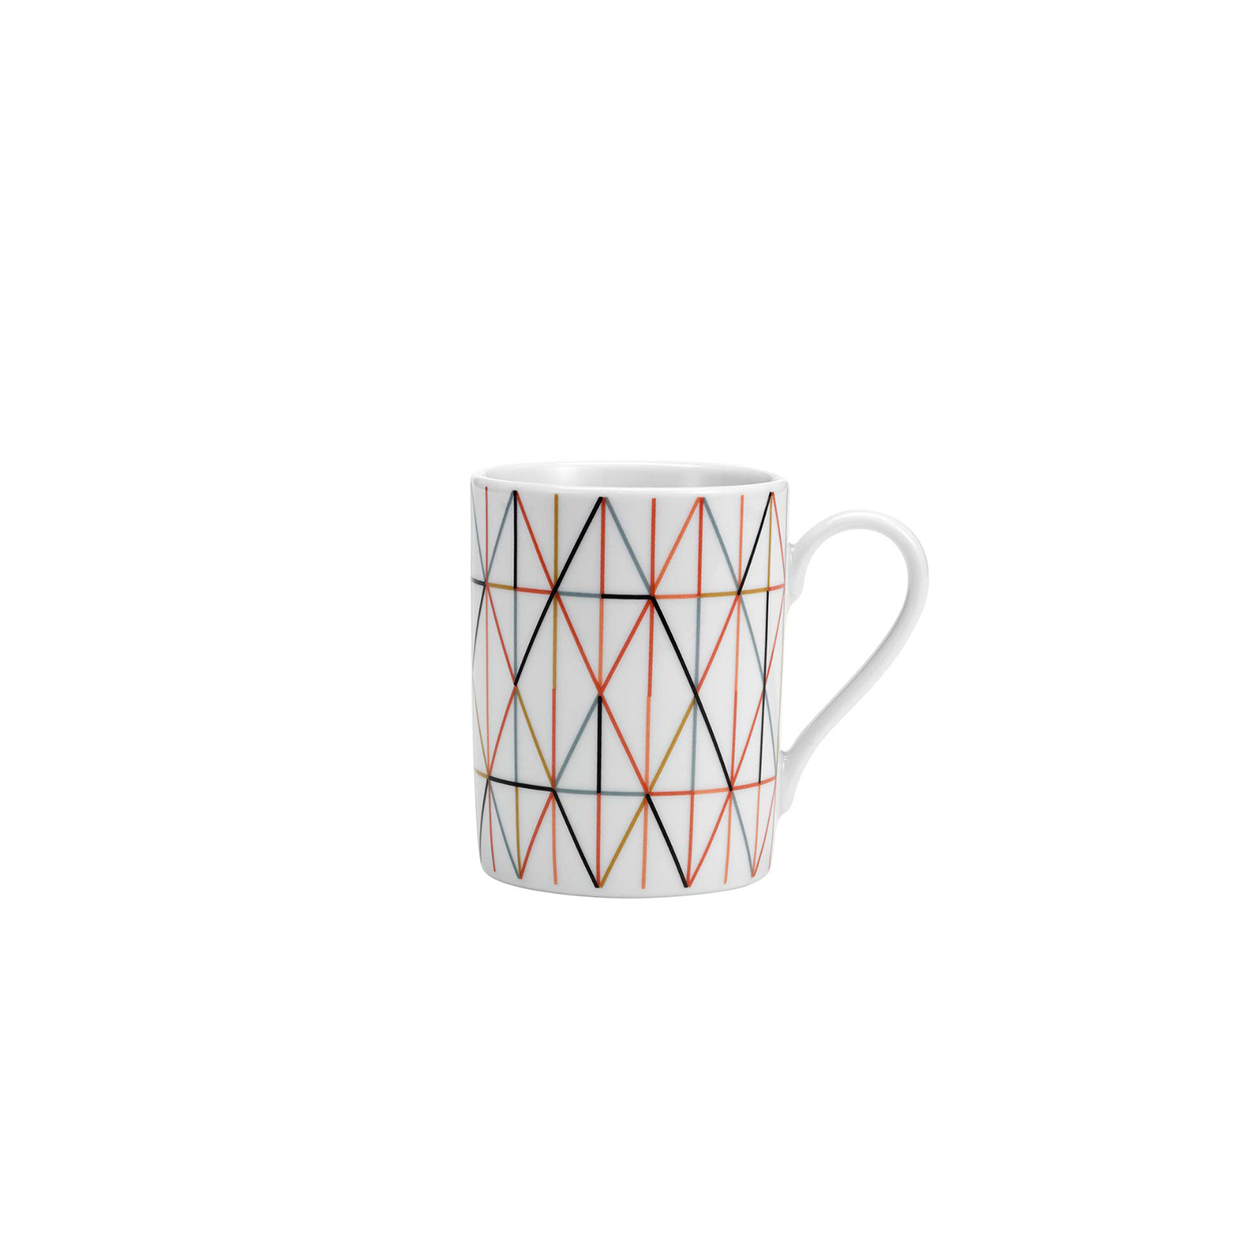 vitra coffee mugs cup grid multitone